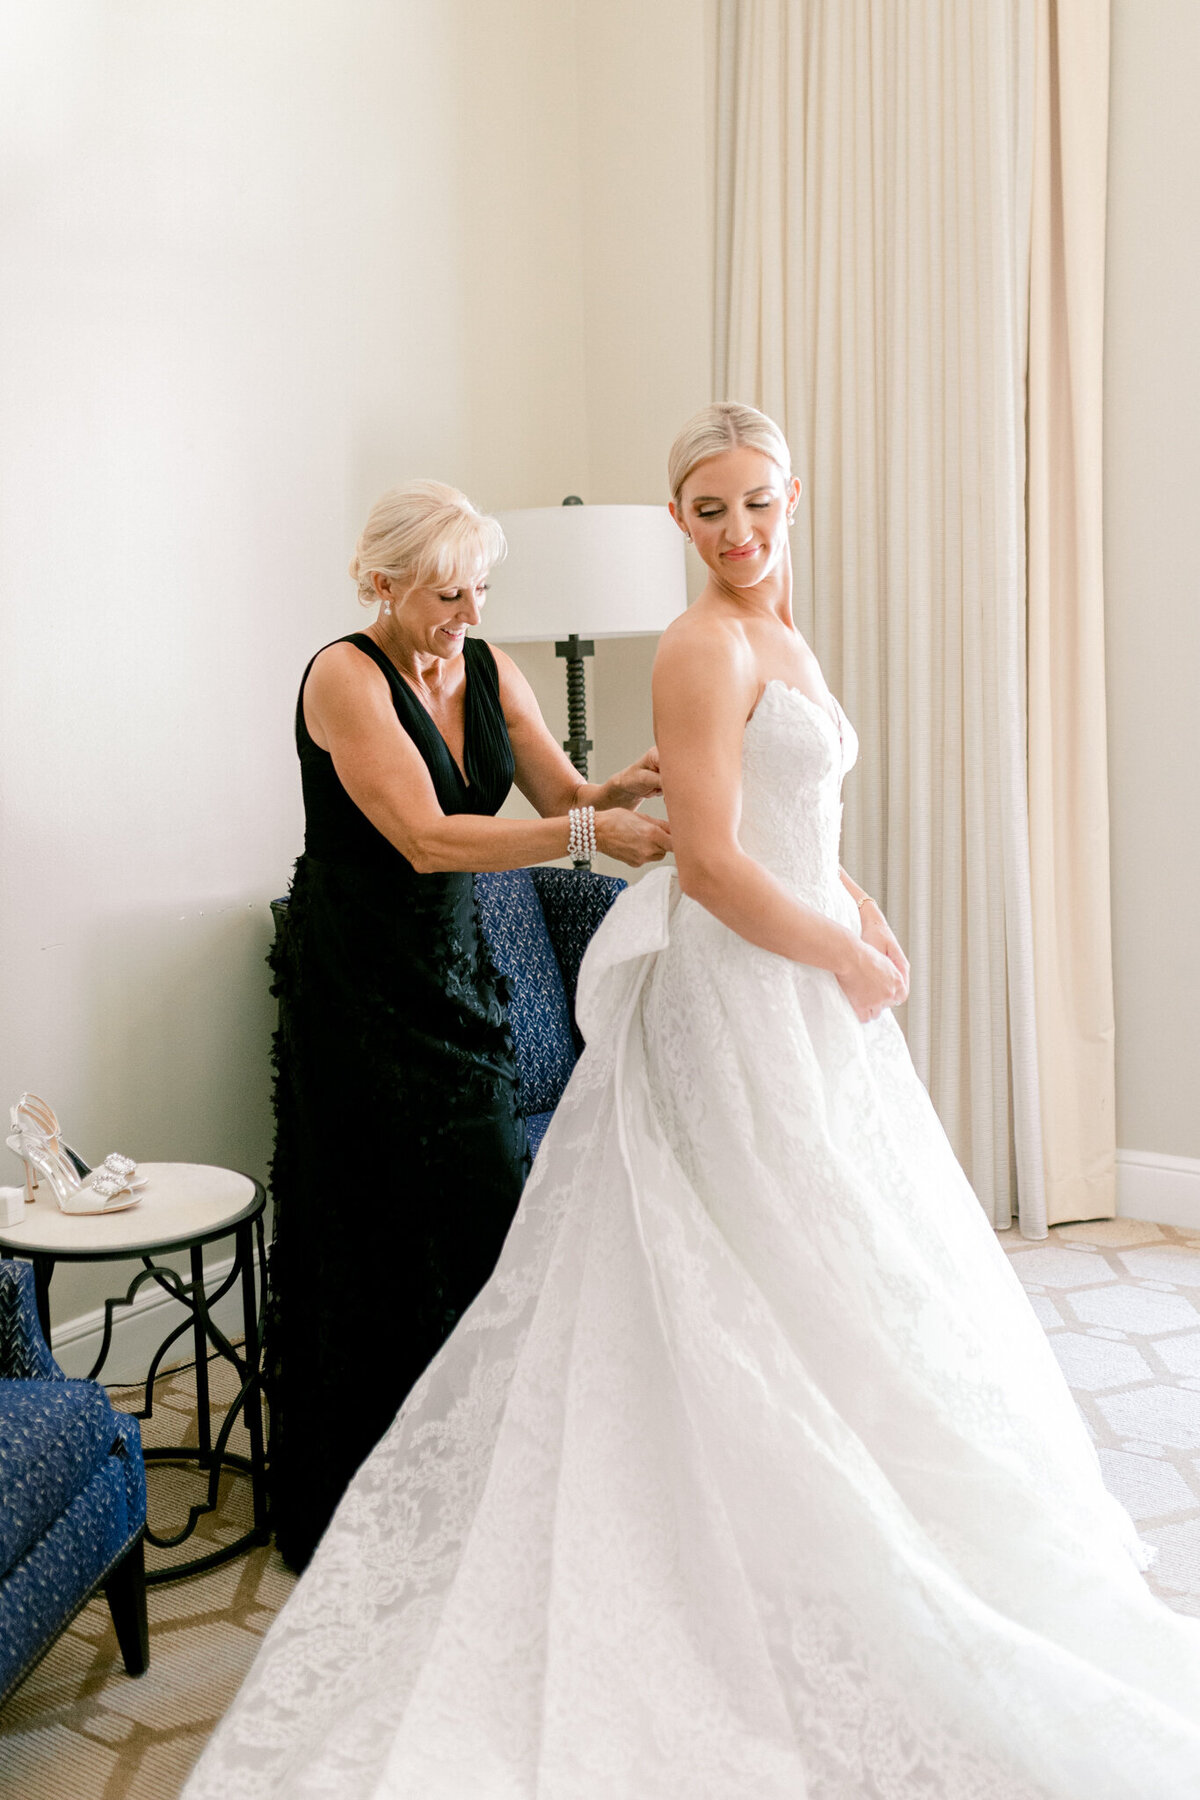 Katelyn & Kyle's Wedding at the Adolphus Hotel | Dallas Wedding Photographer | Sami Kathryn Photography-58